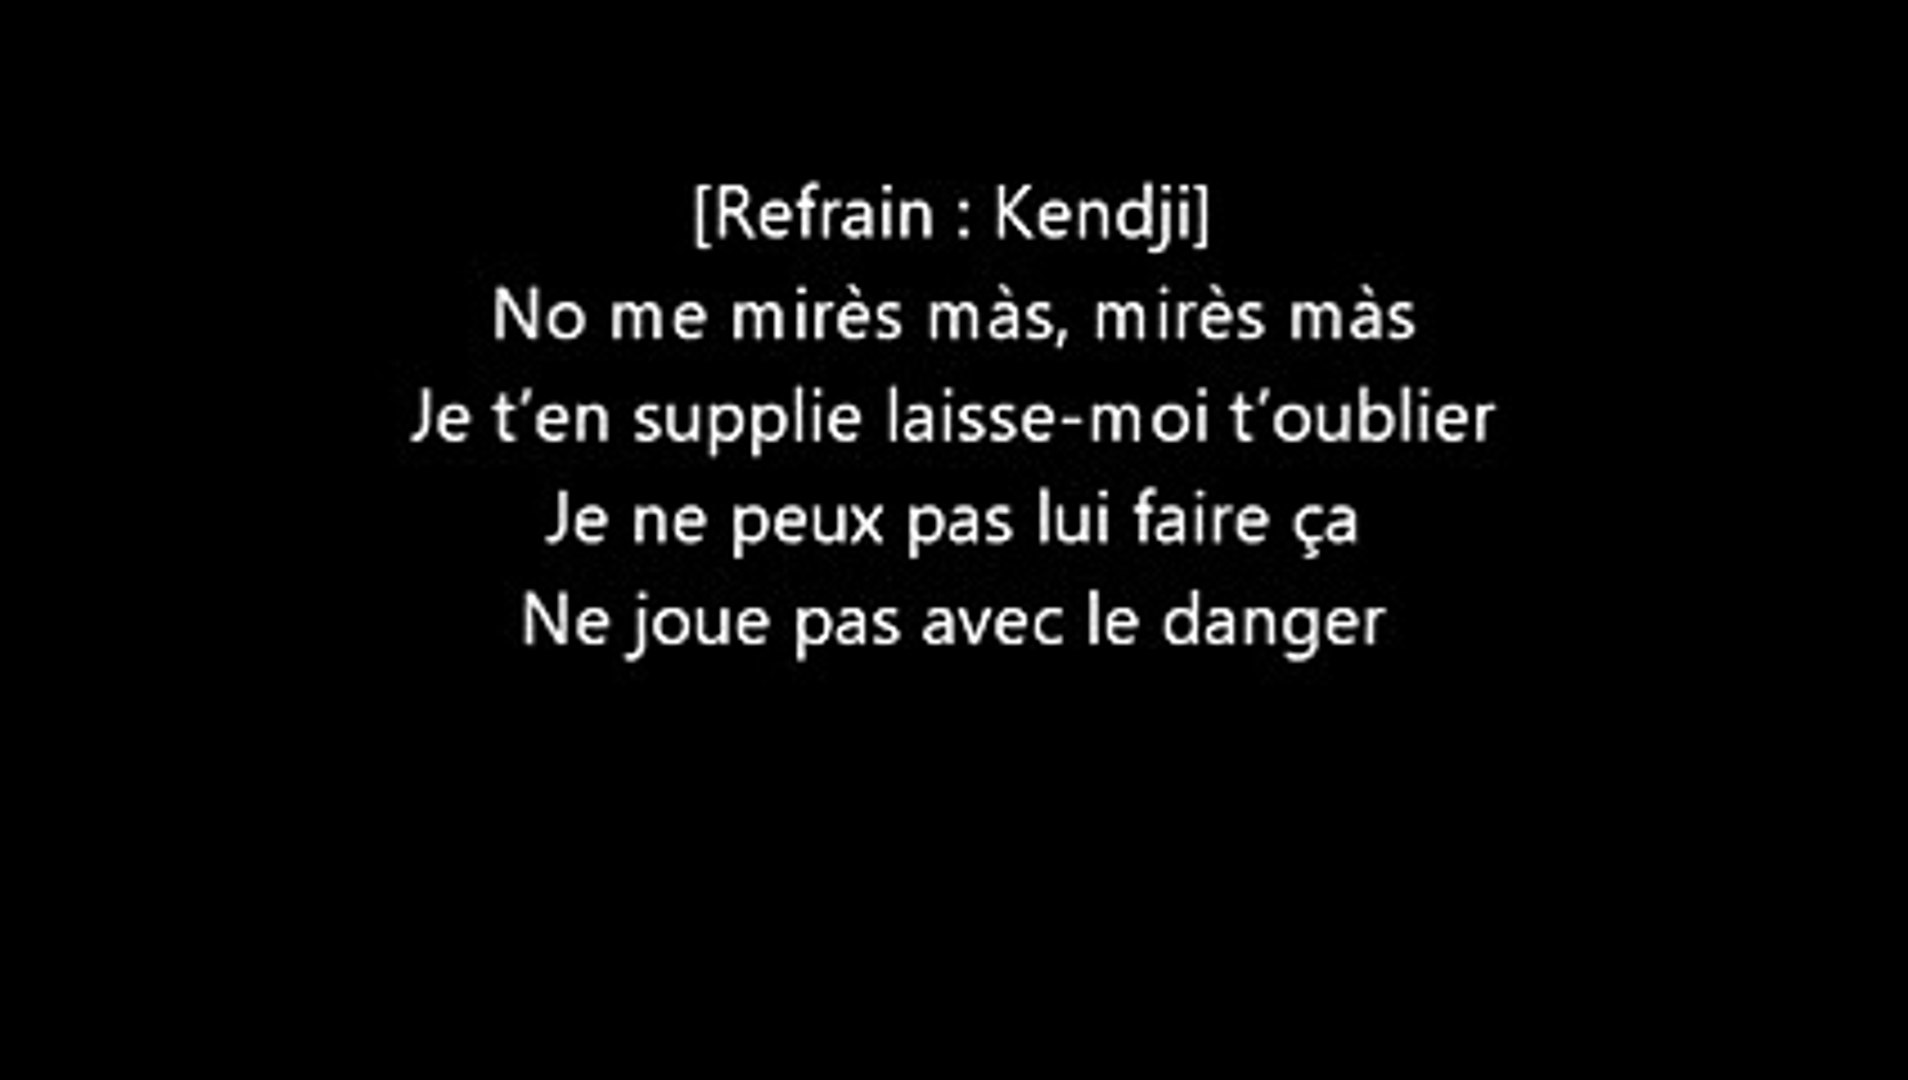 Kendji girac Soprano - No me mires mas parole lyrics - Vidéo Dailymotion